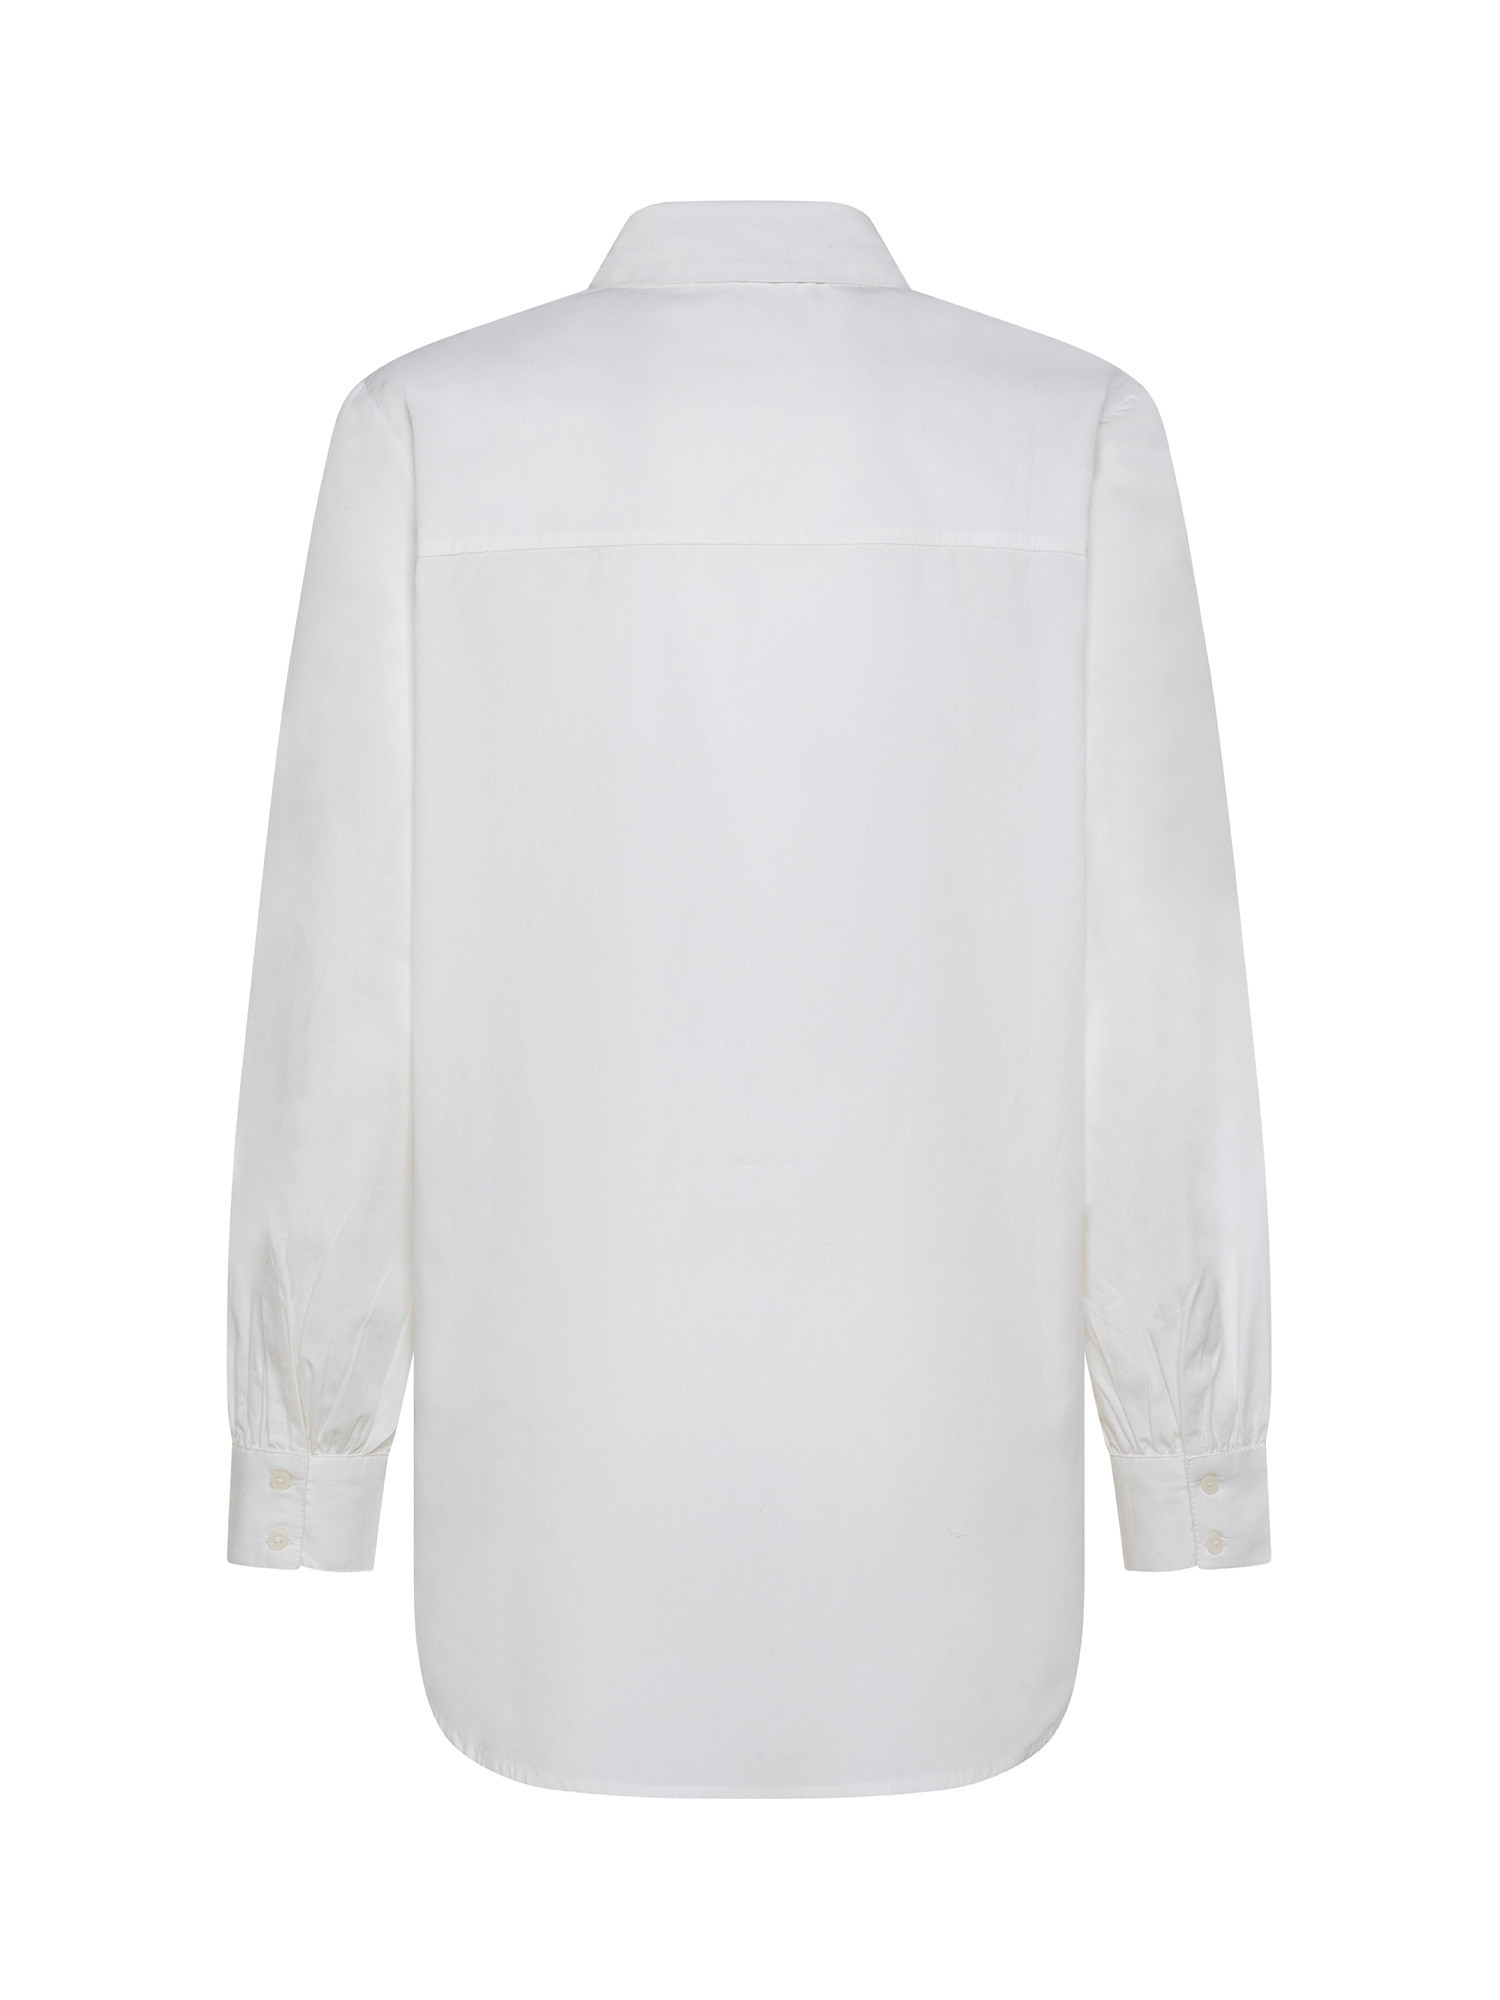 Classic shirt, White, large image number 1